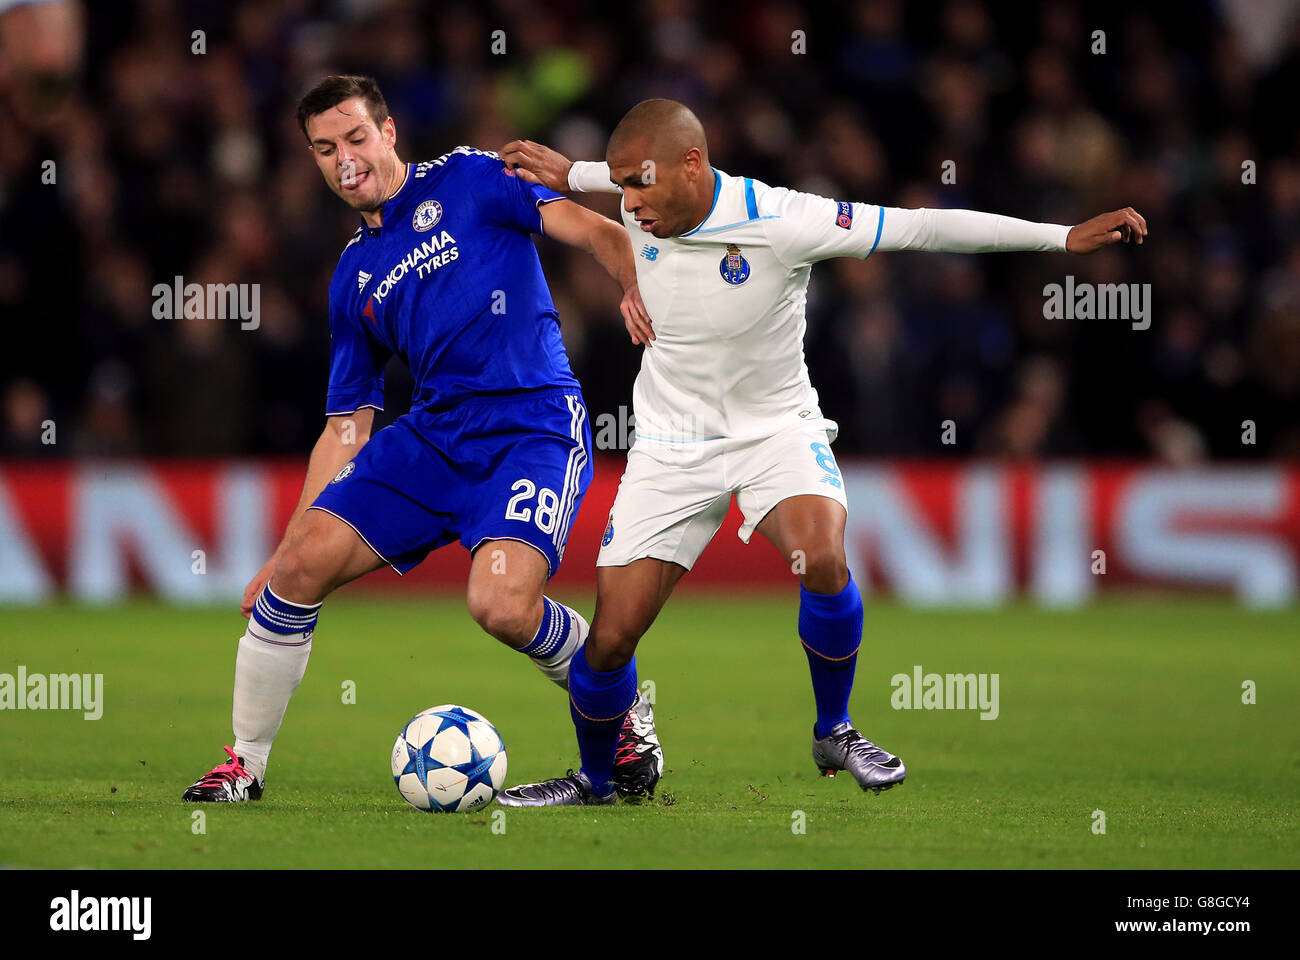 Chelsea's Cesar Azpilicueta (left) and Porto's Yacine Brahimi battle for the ball during the UEFA Champions League match at Stamford Bridge, London. Stock Photo